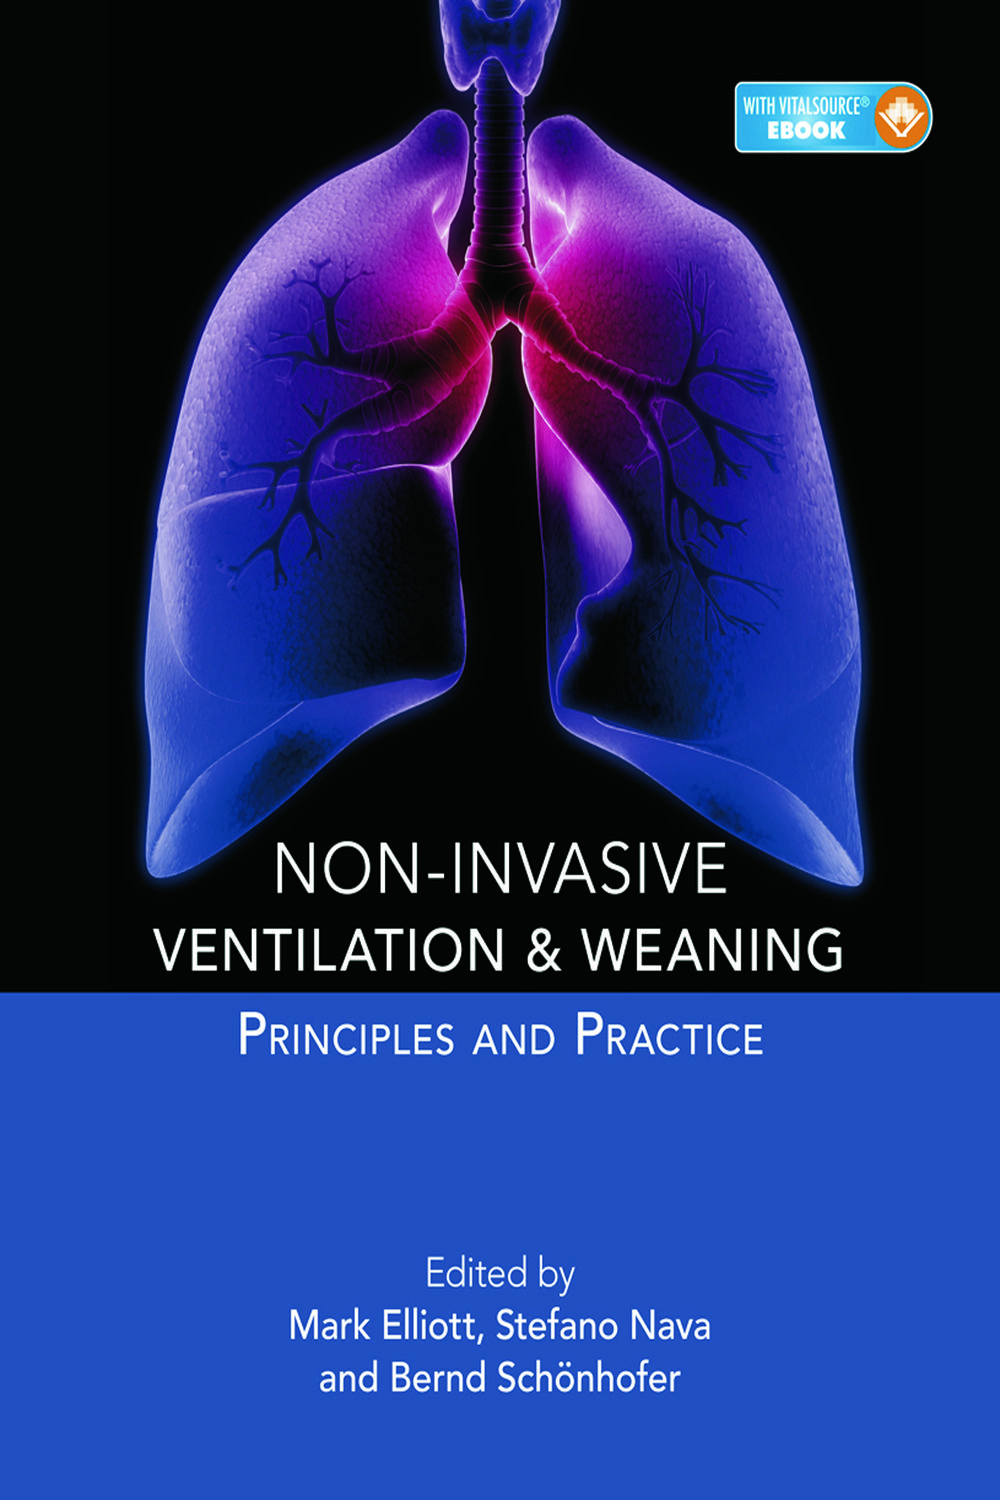 Non-invasive Ventilation and Weaning: Principles and Practice - Mark Elliott, Stefano Nava, Bernd Schonhofer